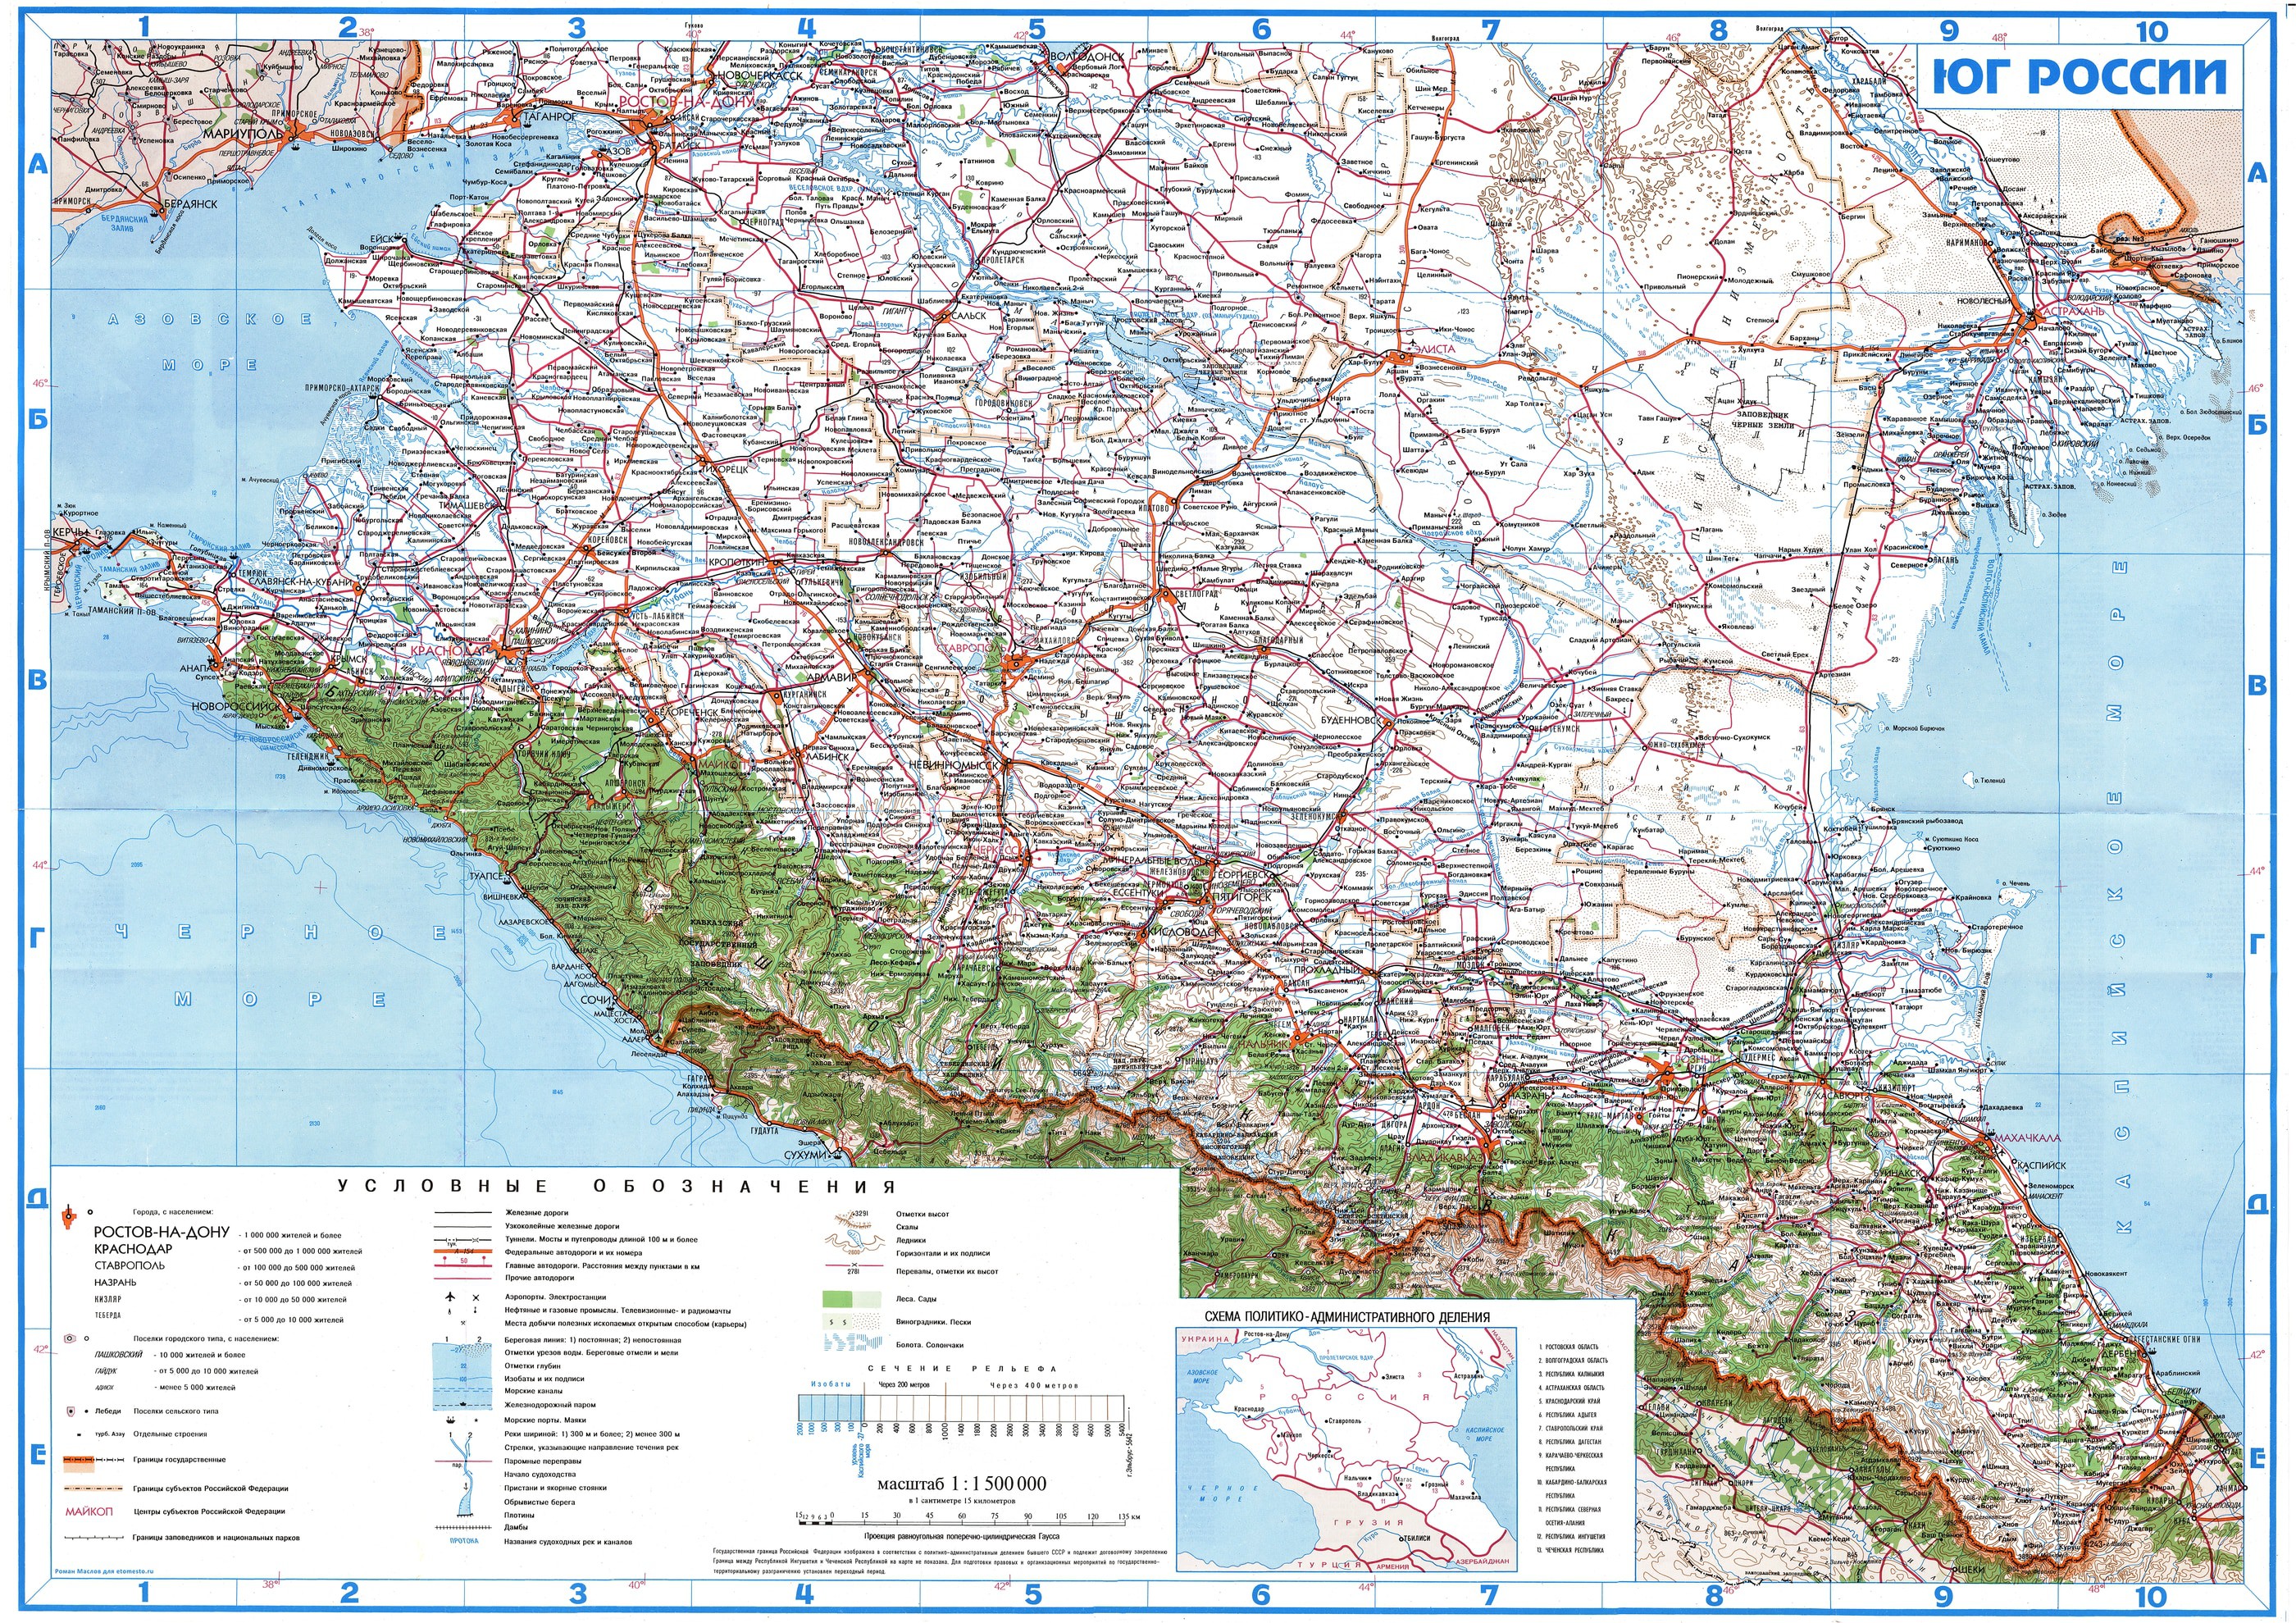 Юг России [М., 2004]. Масштаб 1:1500000 // http://www.etomesto.ru/map-kuban_ug-rossii/